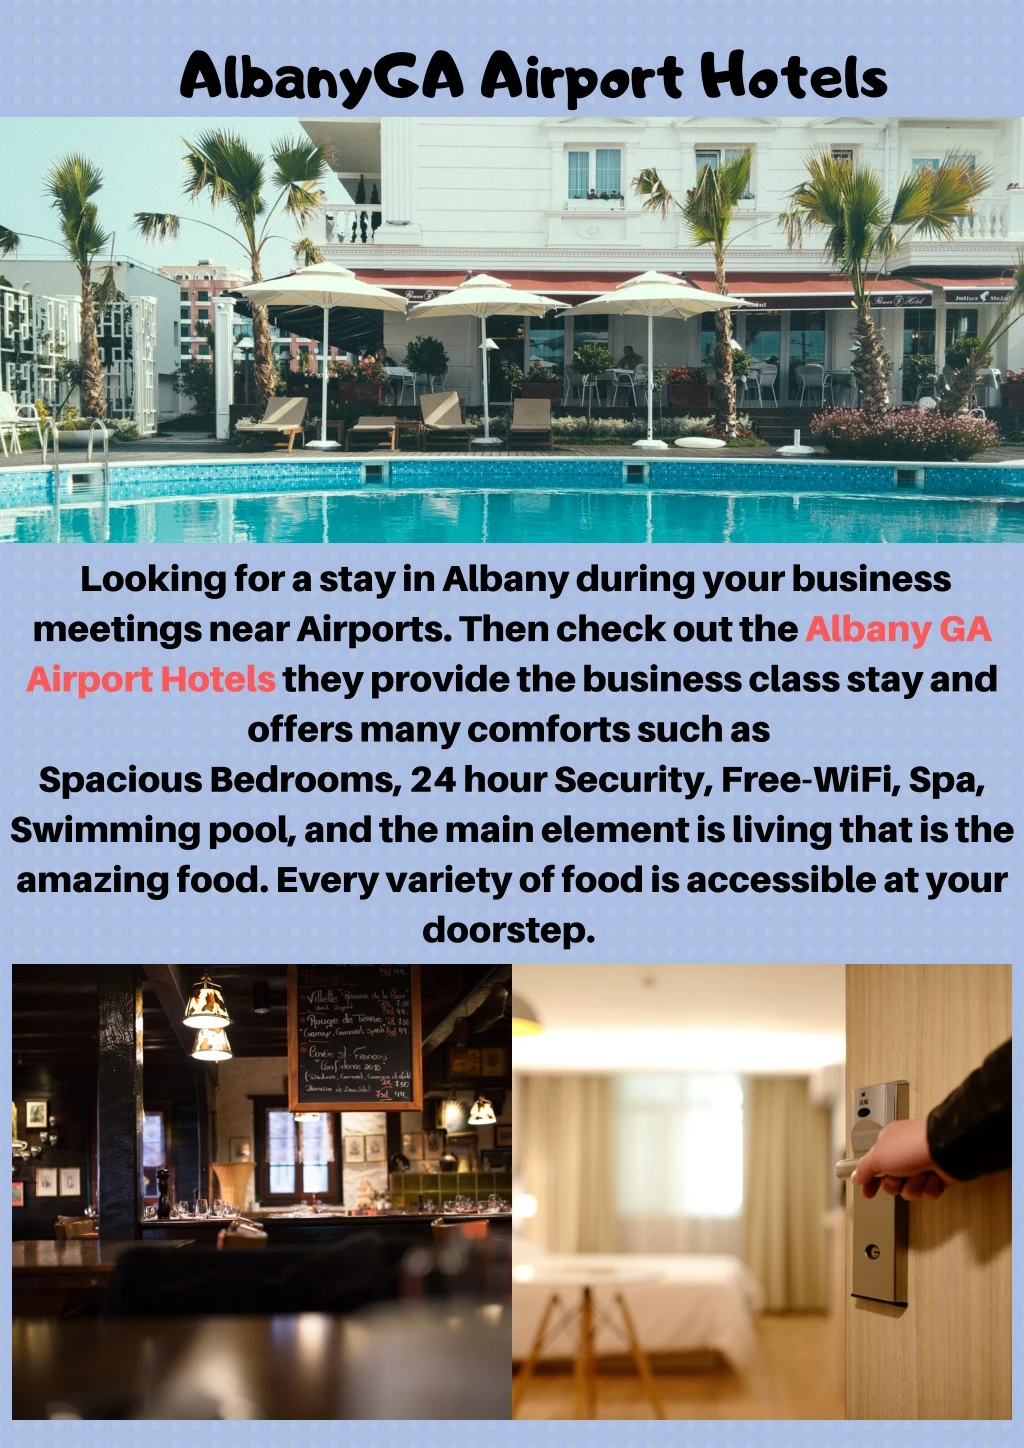 albanyga airport hotels